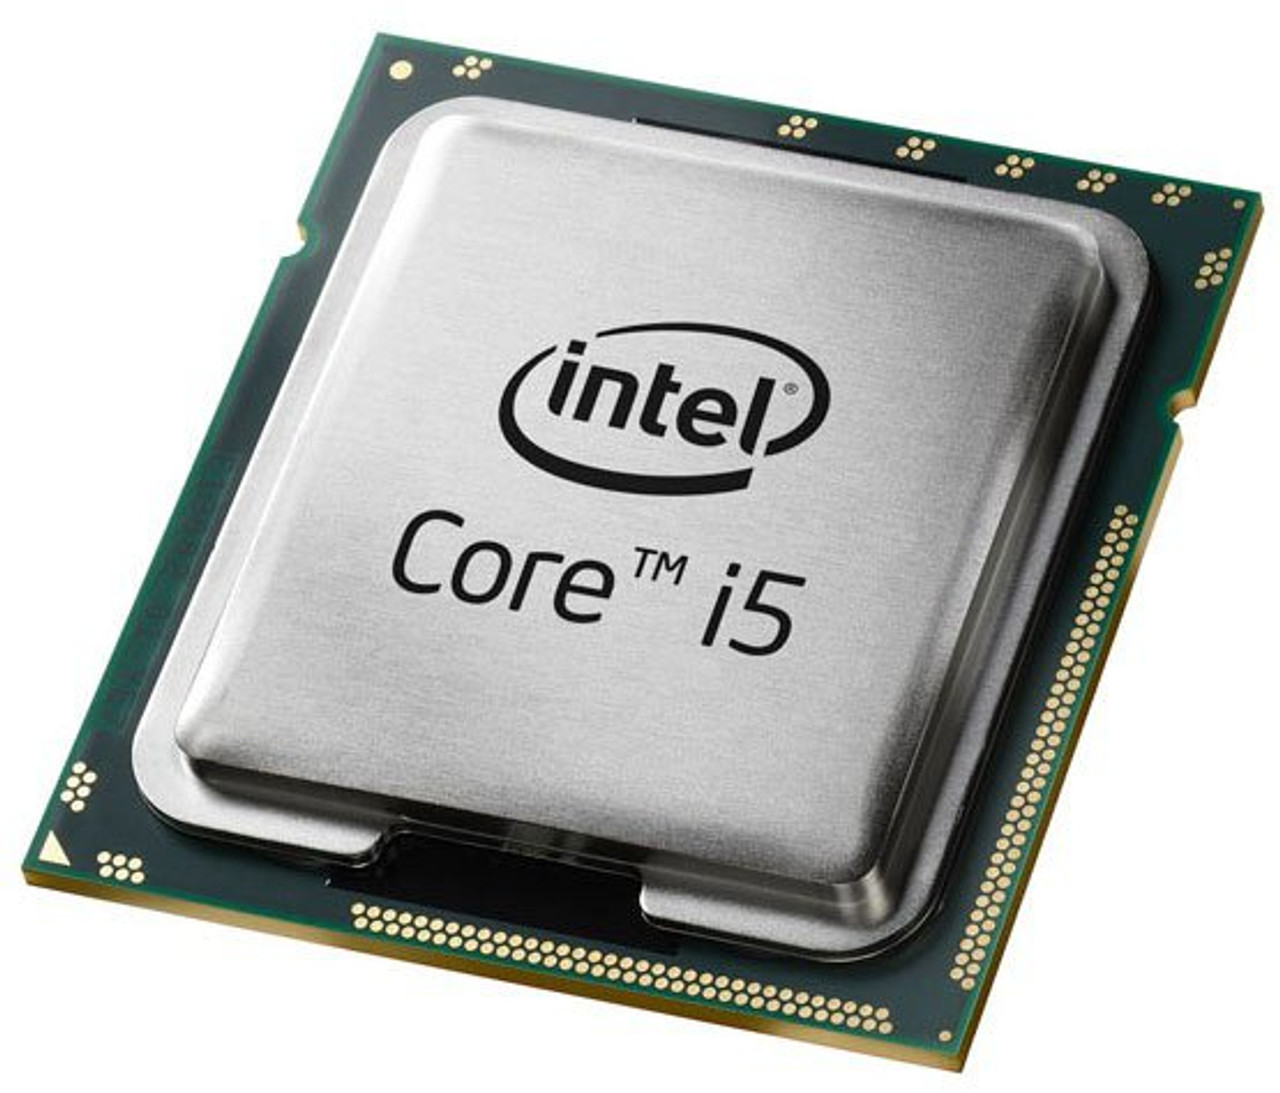 Intel Core Â® â„¢ i5-7600K Processor (6M Cache, up to 4.20 GHz) 3.8GHz 6MB Smart Cache processo